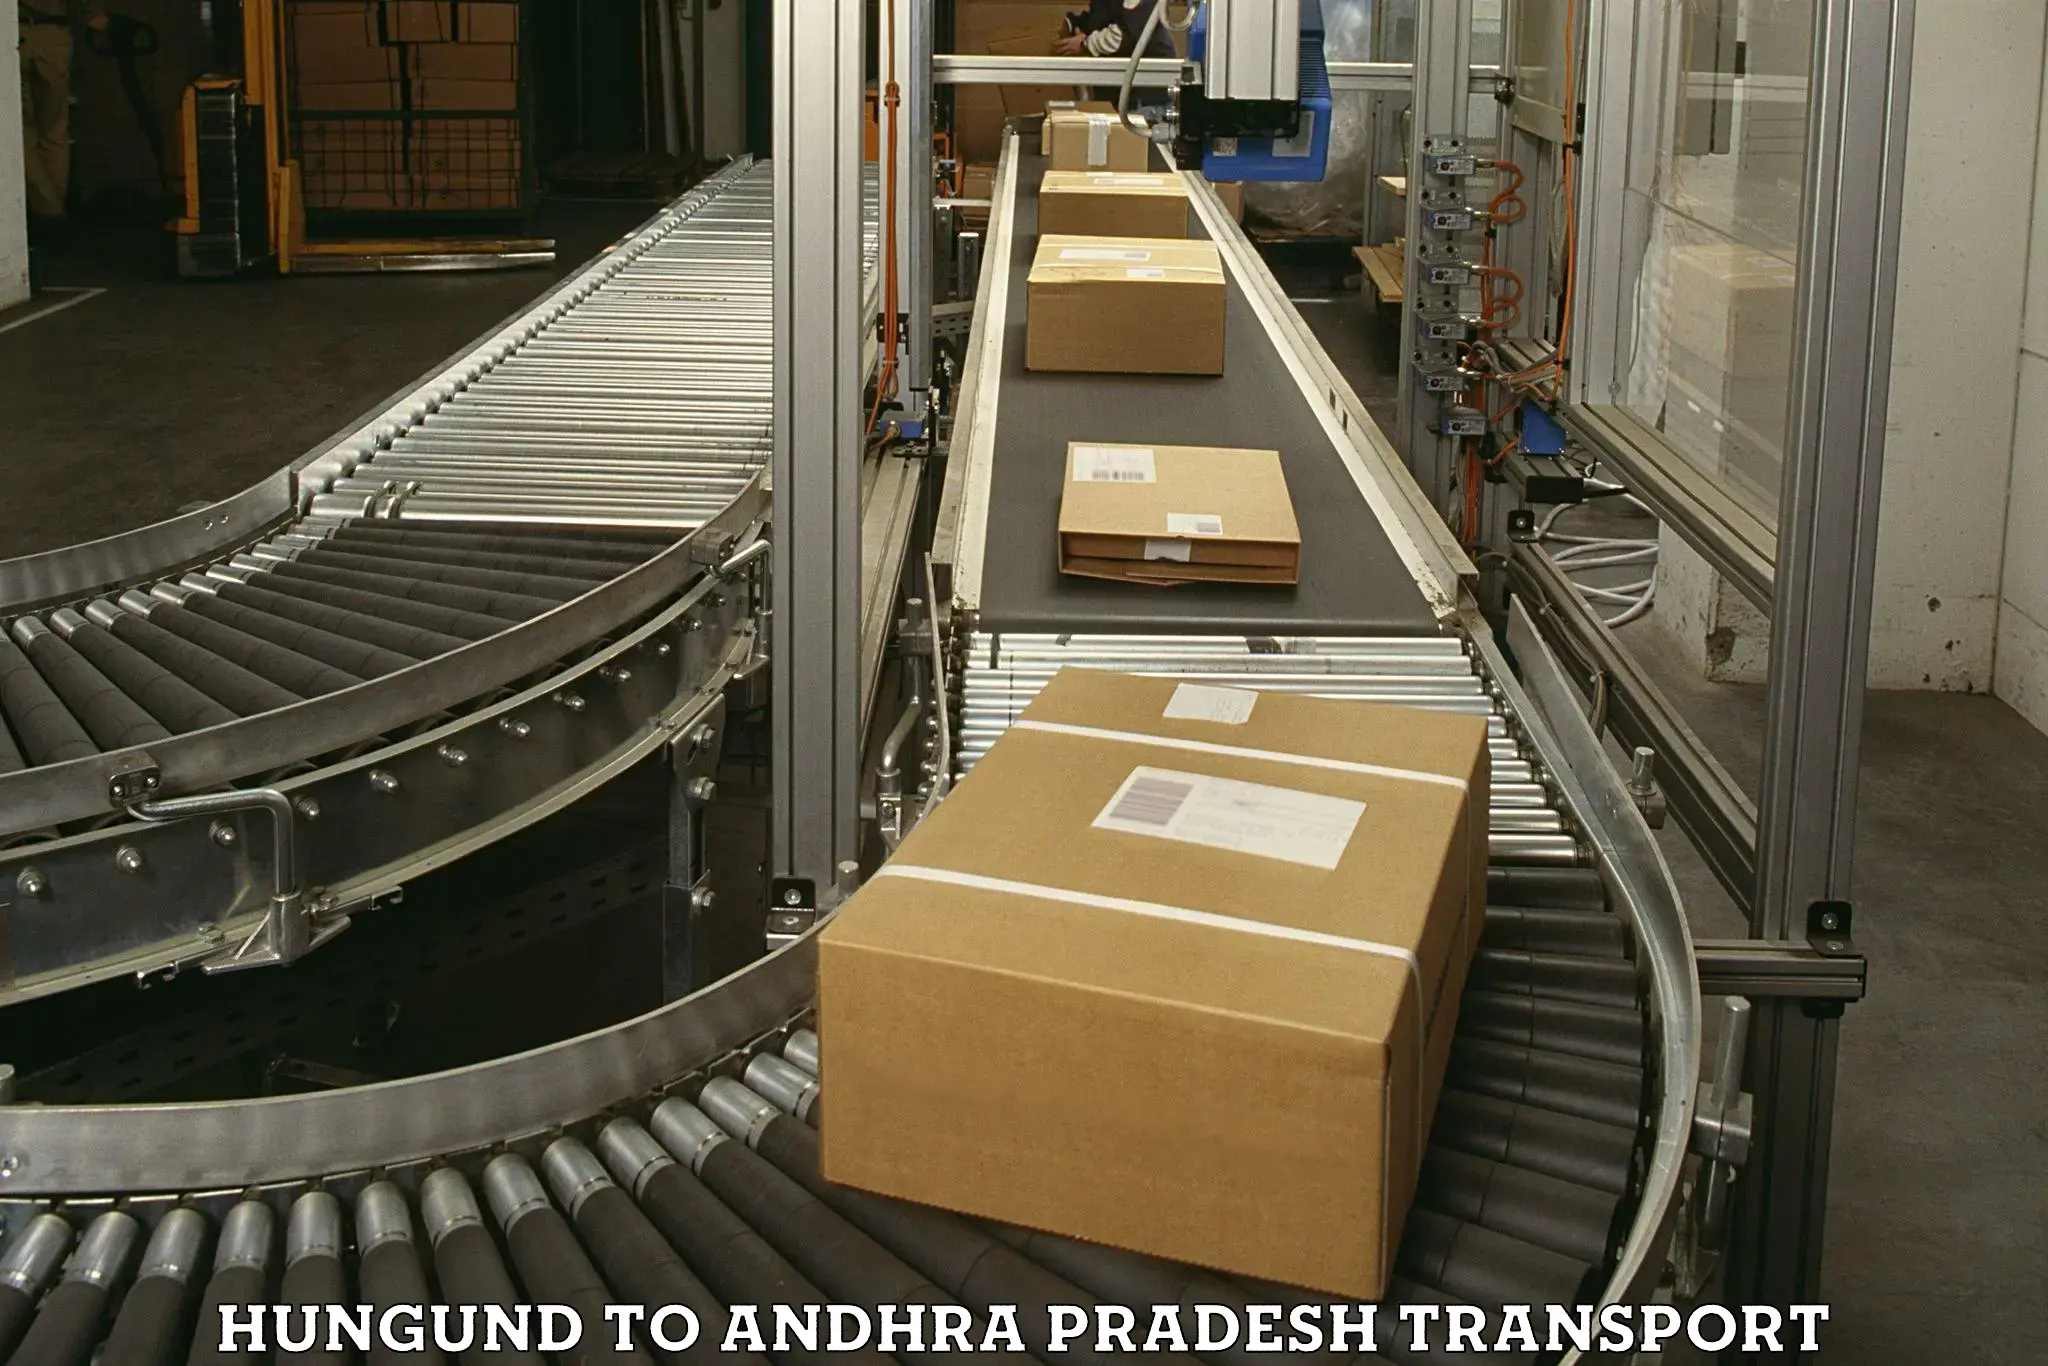 Cycle transportation service Hungund to Andhra Pradesh